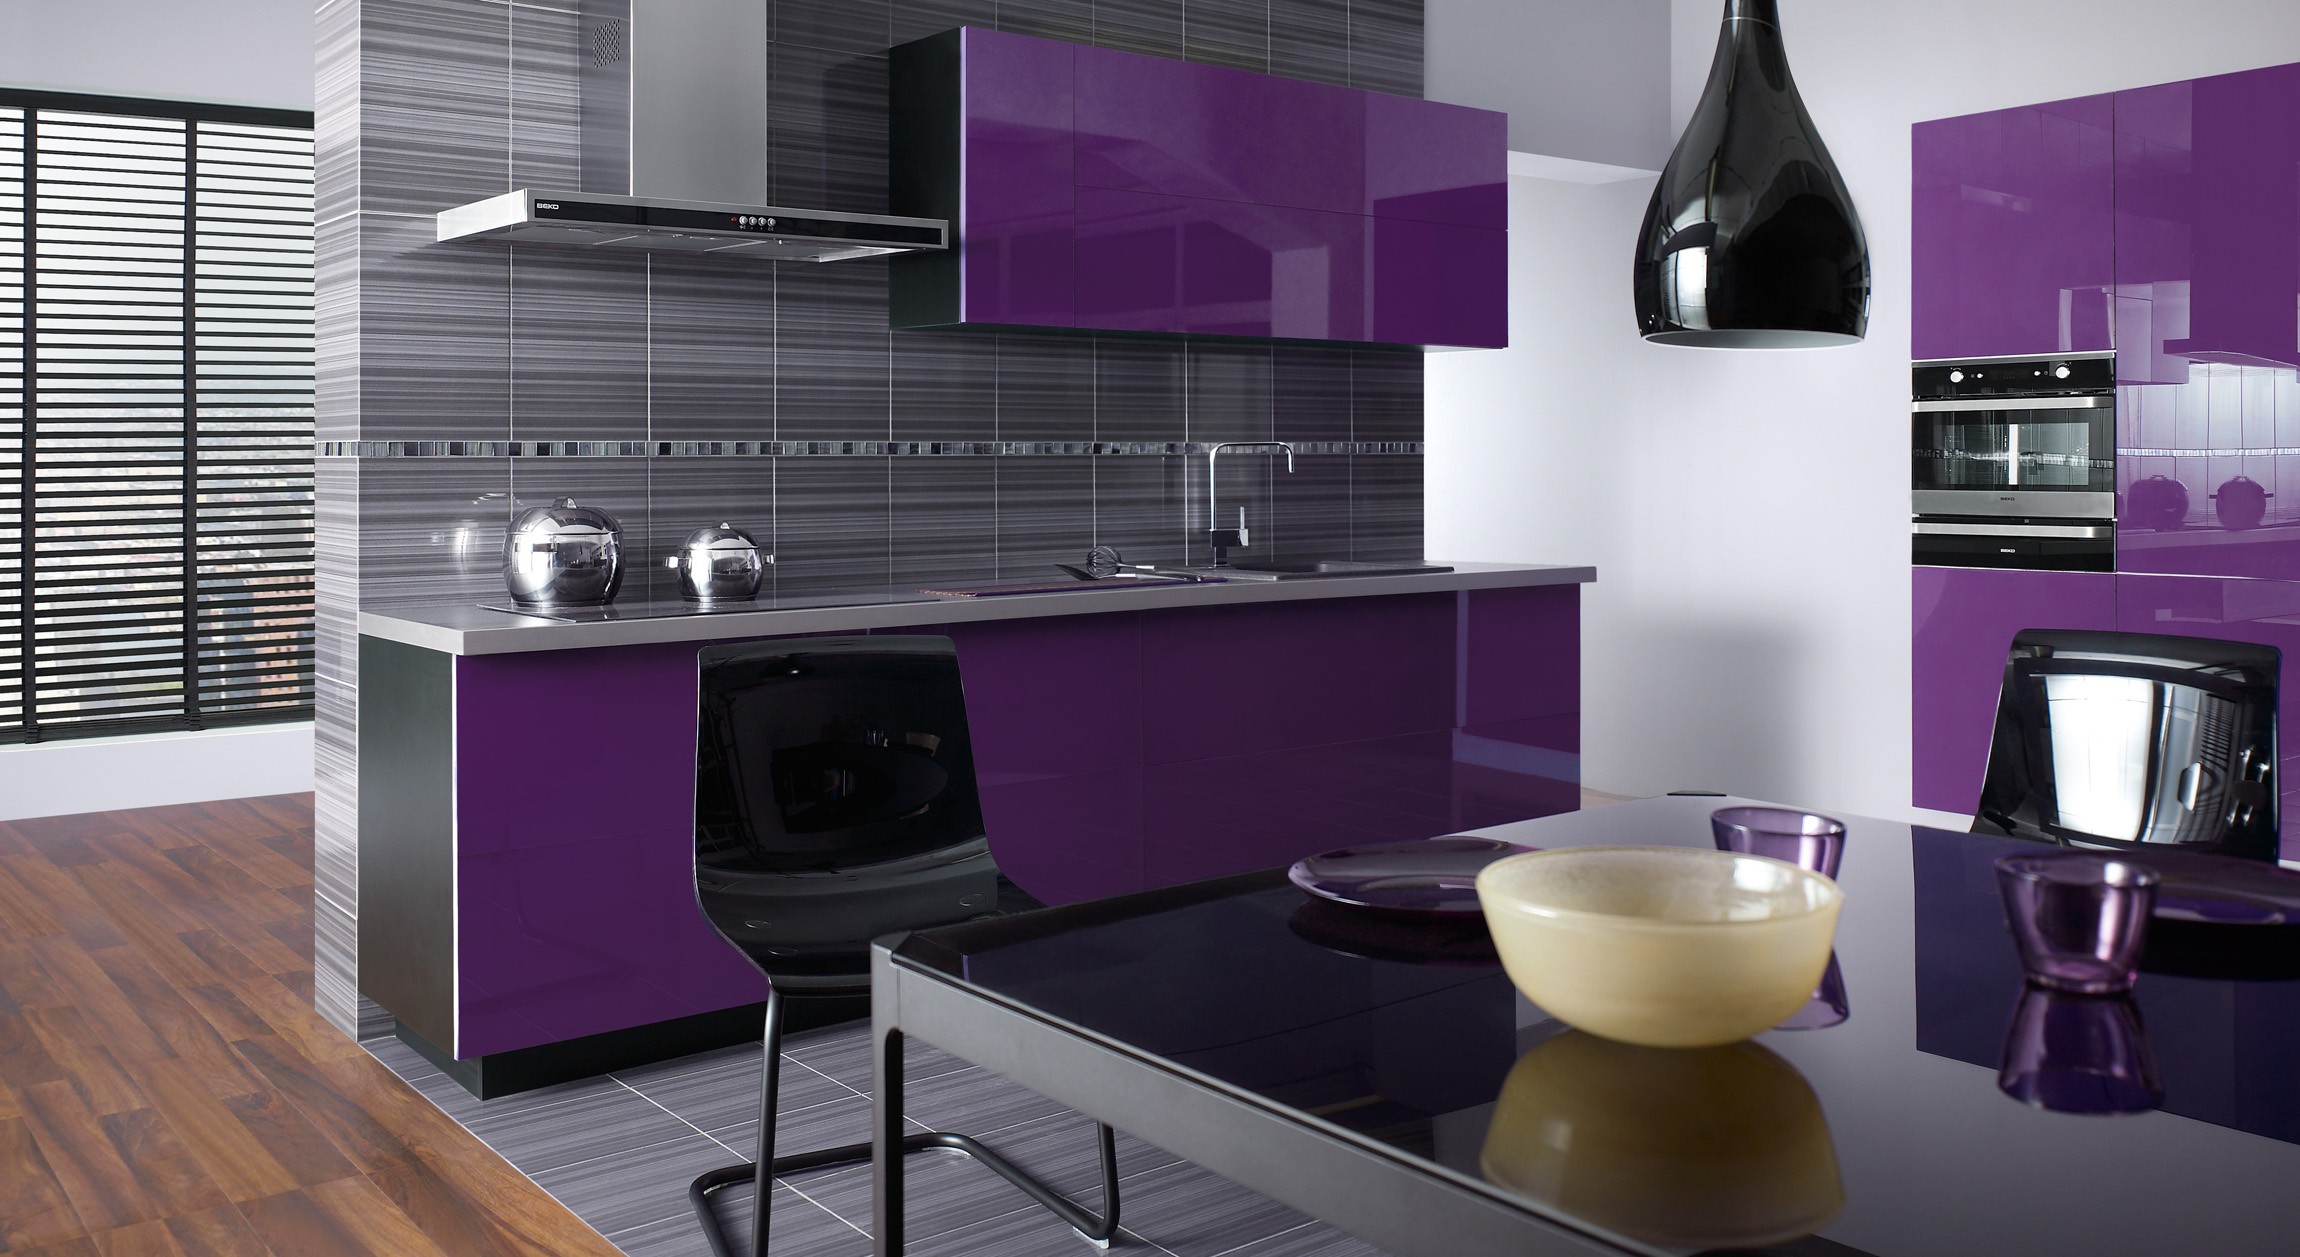 фиолетовая кухня